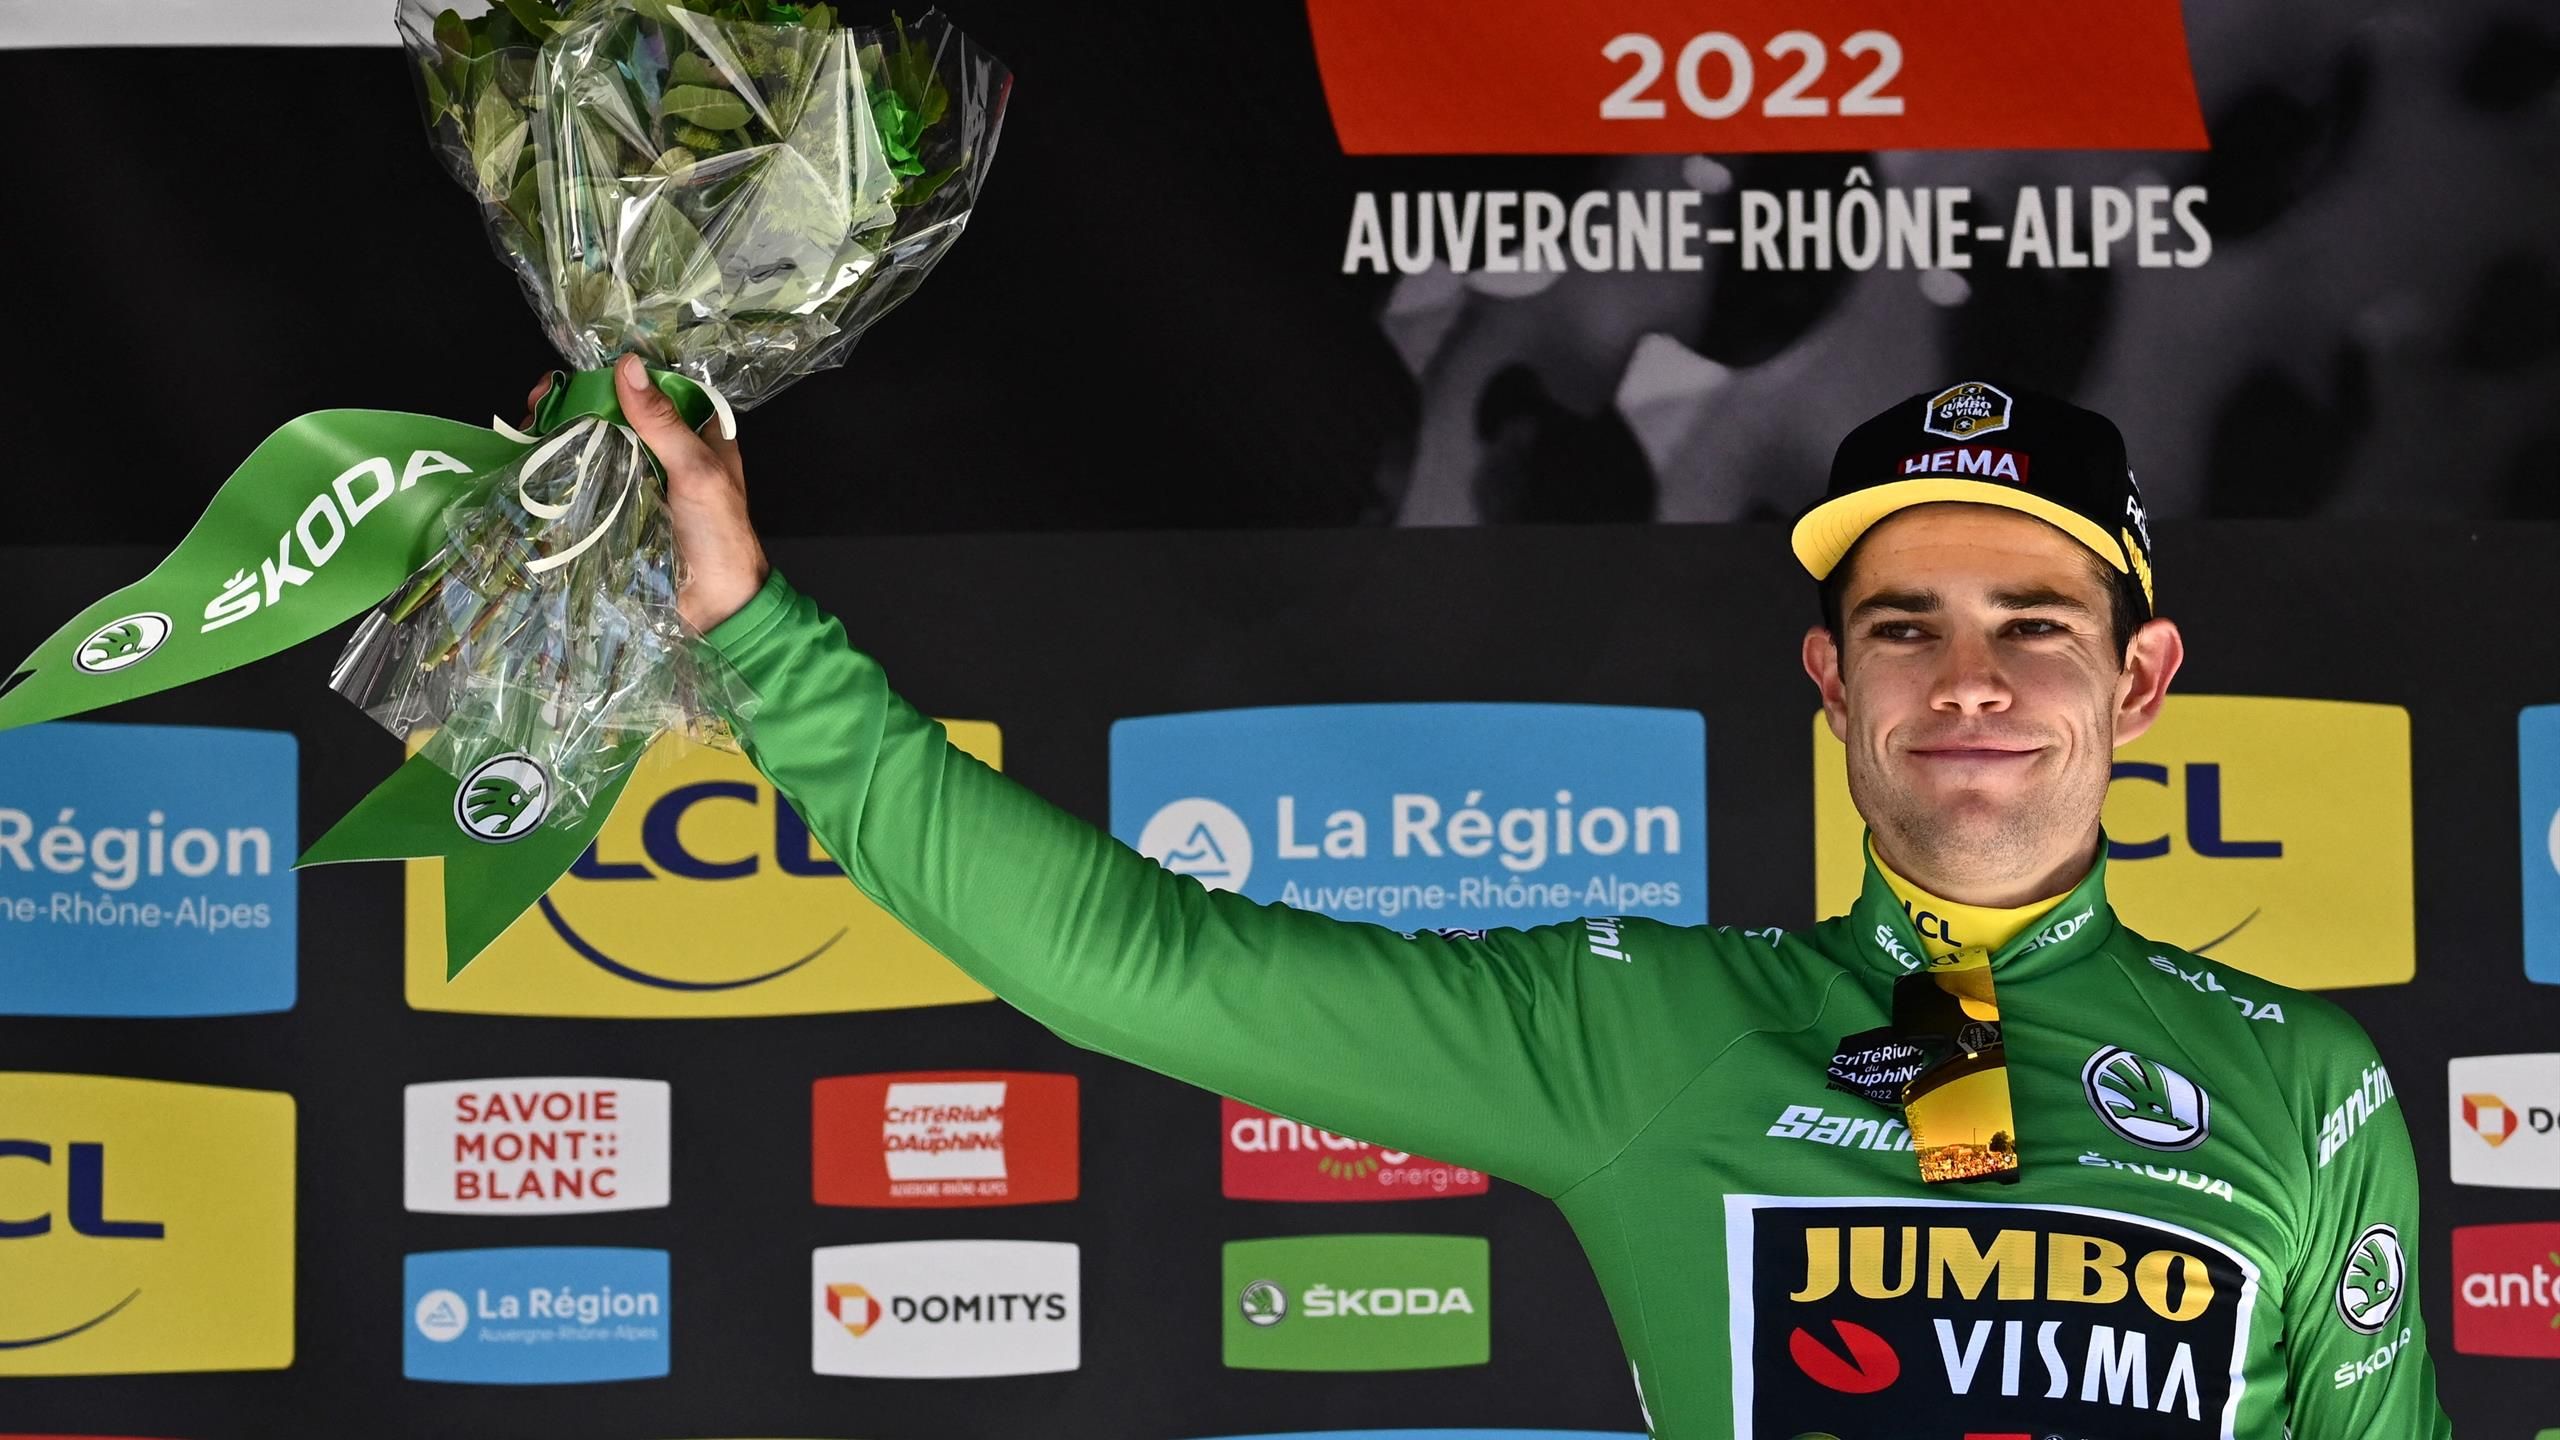 Klap Lotsbestemming ondeugd Tour de France 2022 – Green jersey and polka dot jersey guide: Wout van  Aert & Ruben Guerreiro favourites? - Eurosport